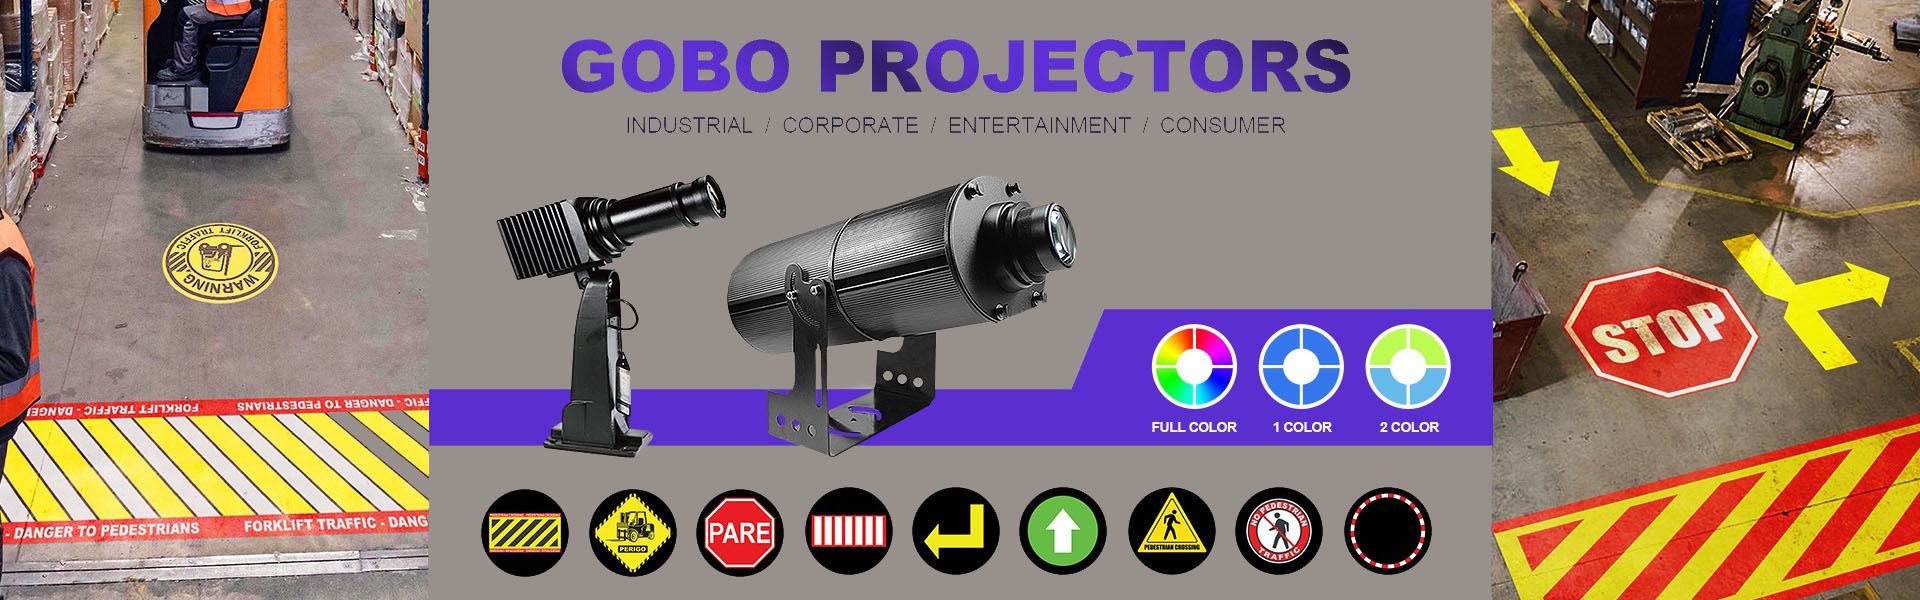 Gobo Logo Projector, светодиодный рабочий свет, светодиодный вилочный погрузчик,Wetech Electronic Technology Limited